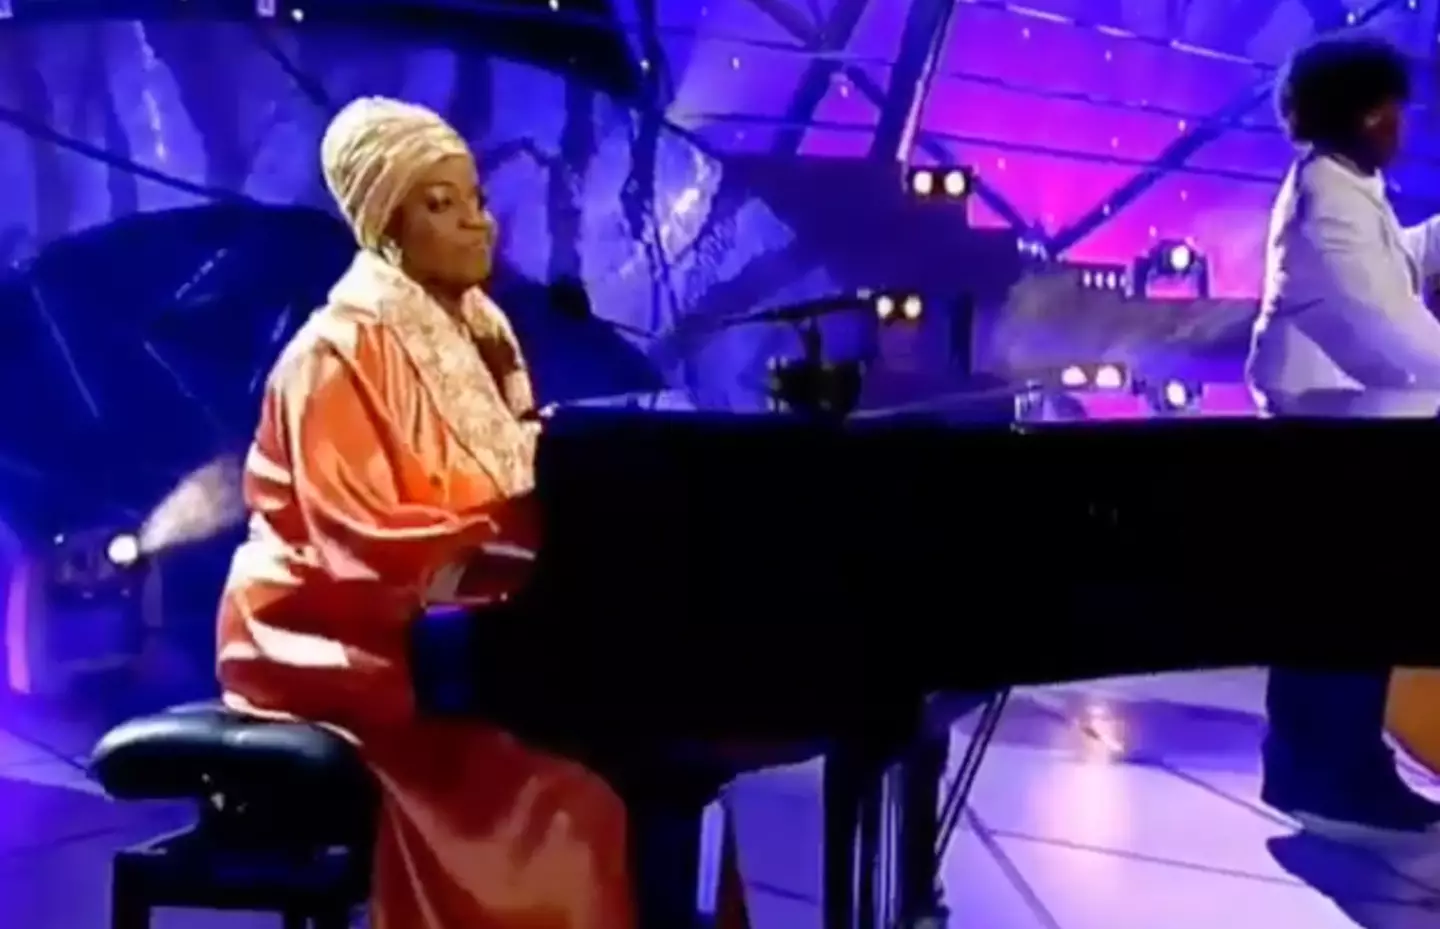 Alison sang a Nina Simone song (